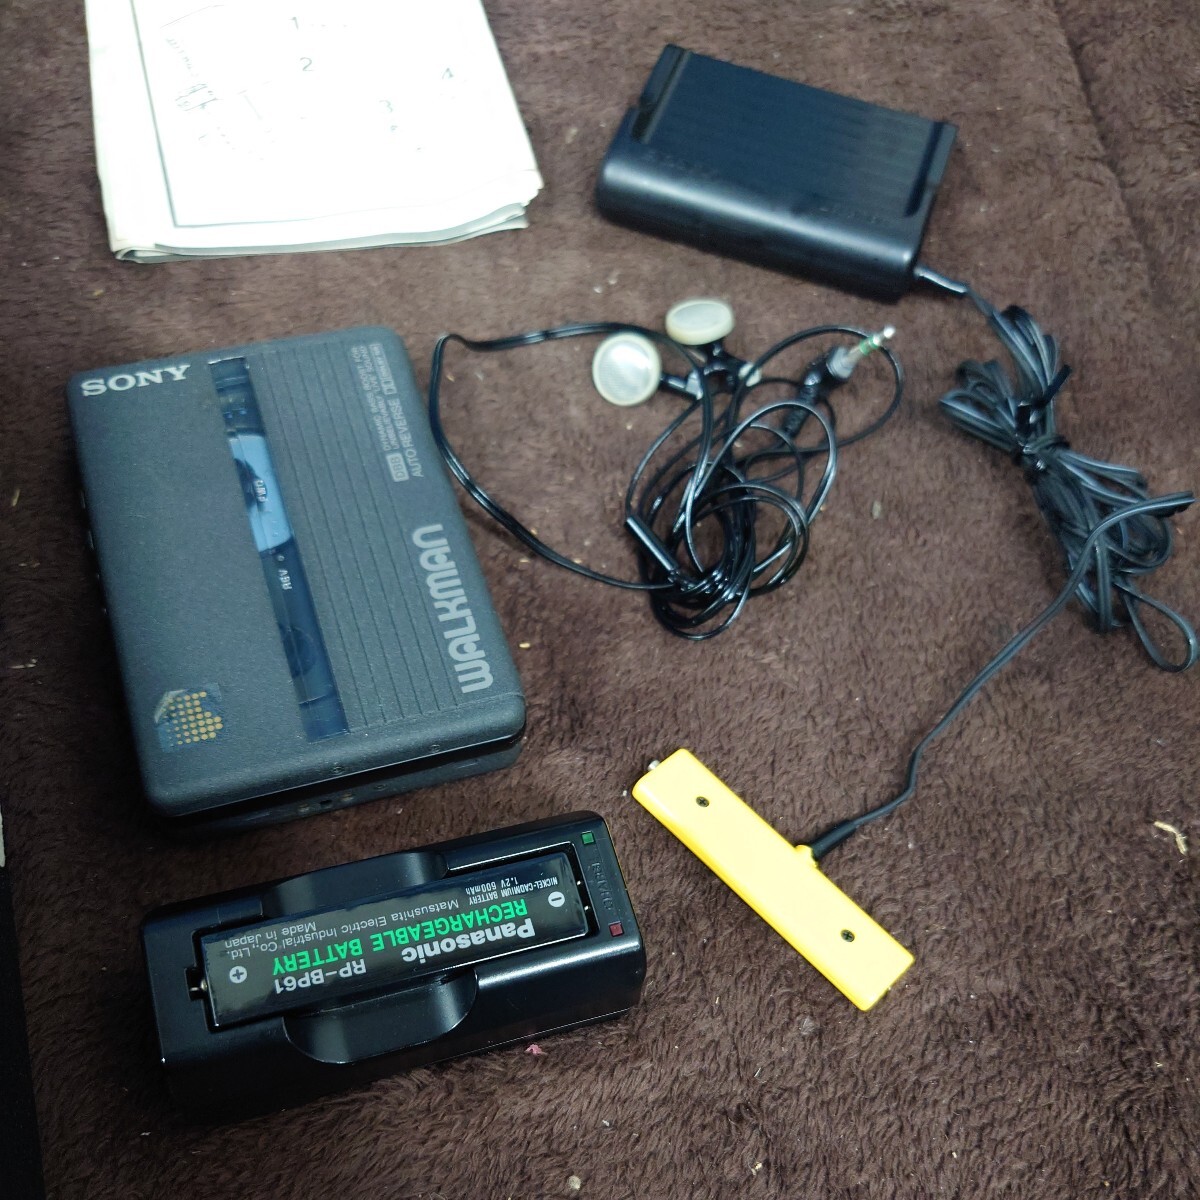 SONY WALKMAN WM-503 secondhand goods present condition goods accessory great number cassette player Walkman Showa Retro Sony 